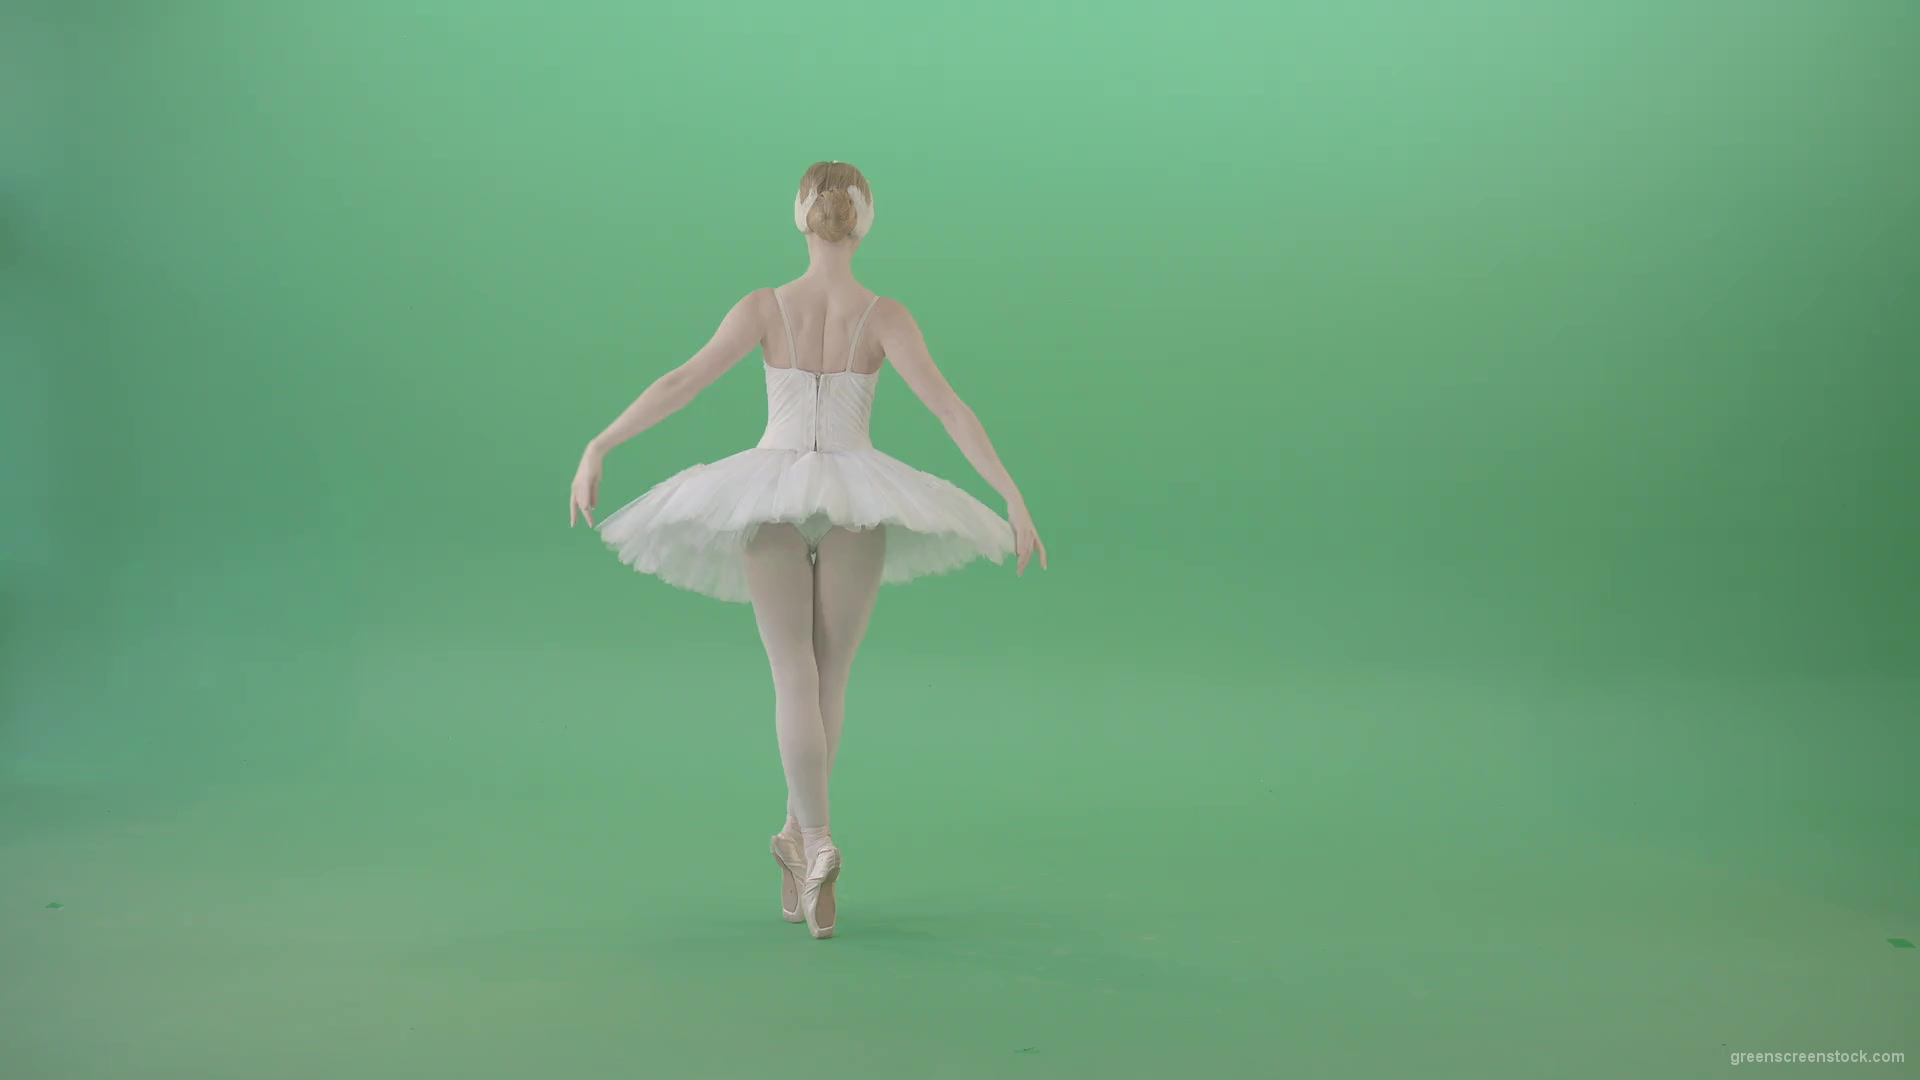 Beautiful-swan-lake-ballet-dance-ballerina-in-back-side-view-dancing-on-green-screen-4K-Video-Footage-1920_001 Green Screen Stock